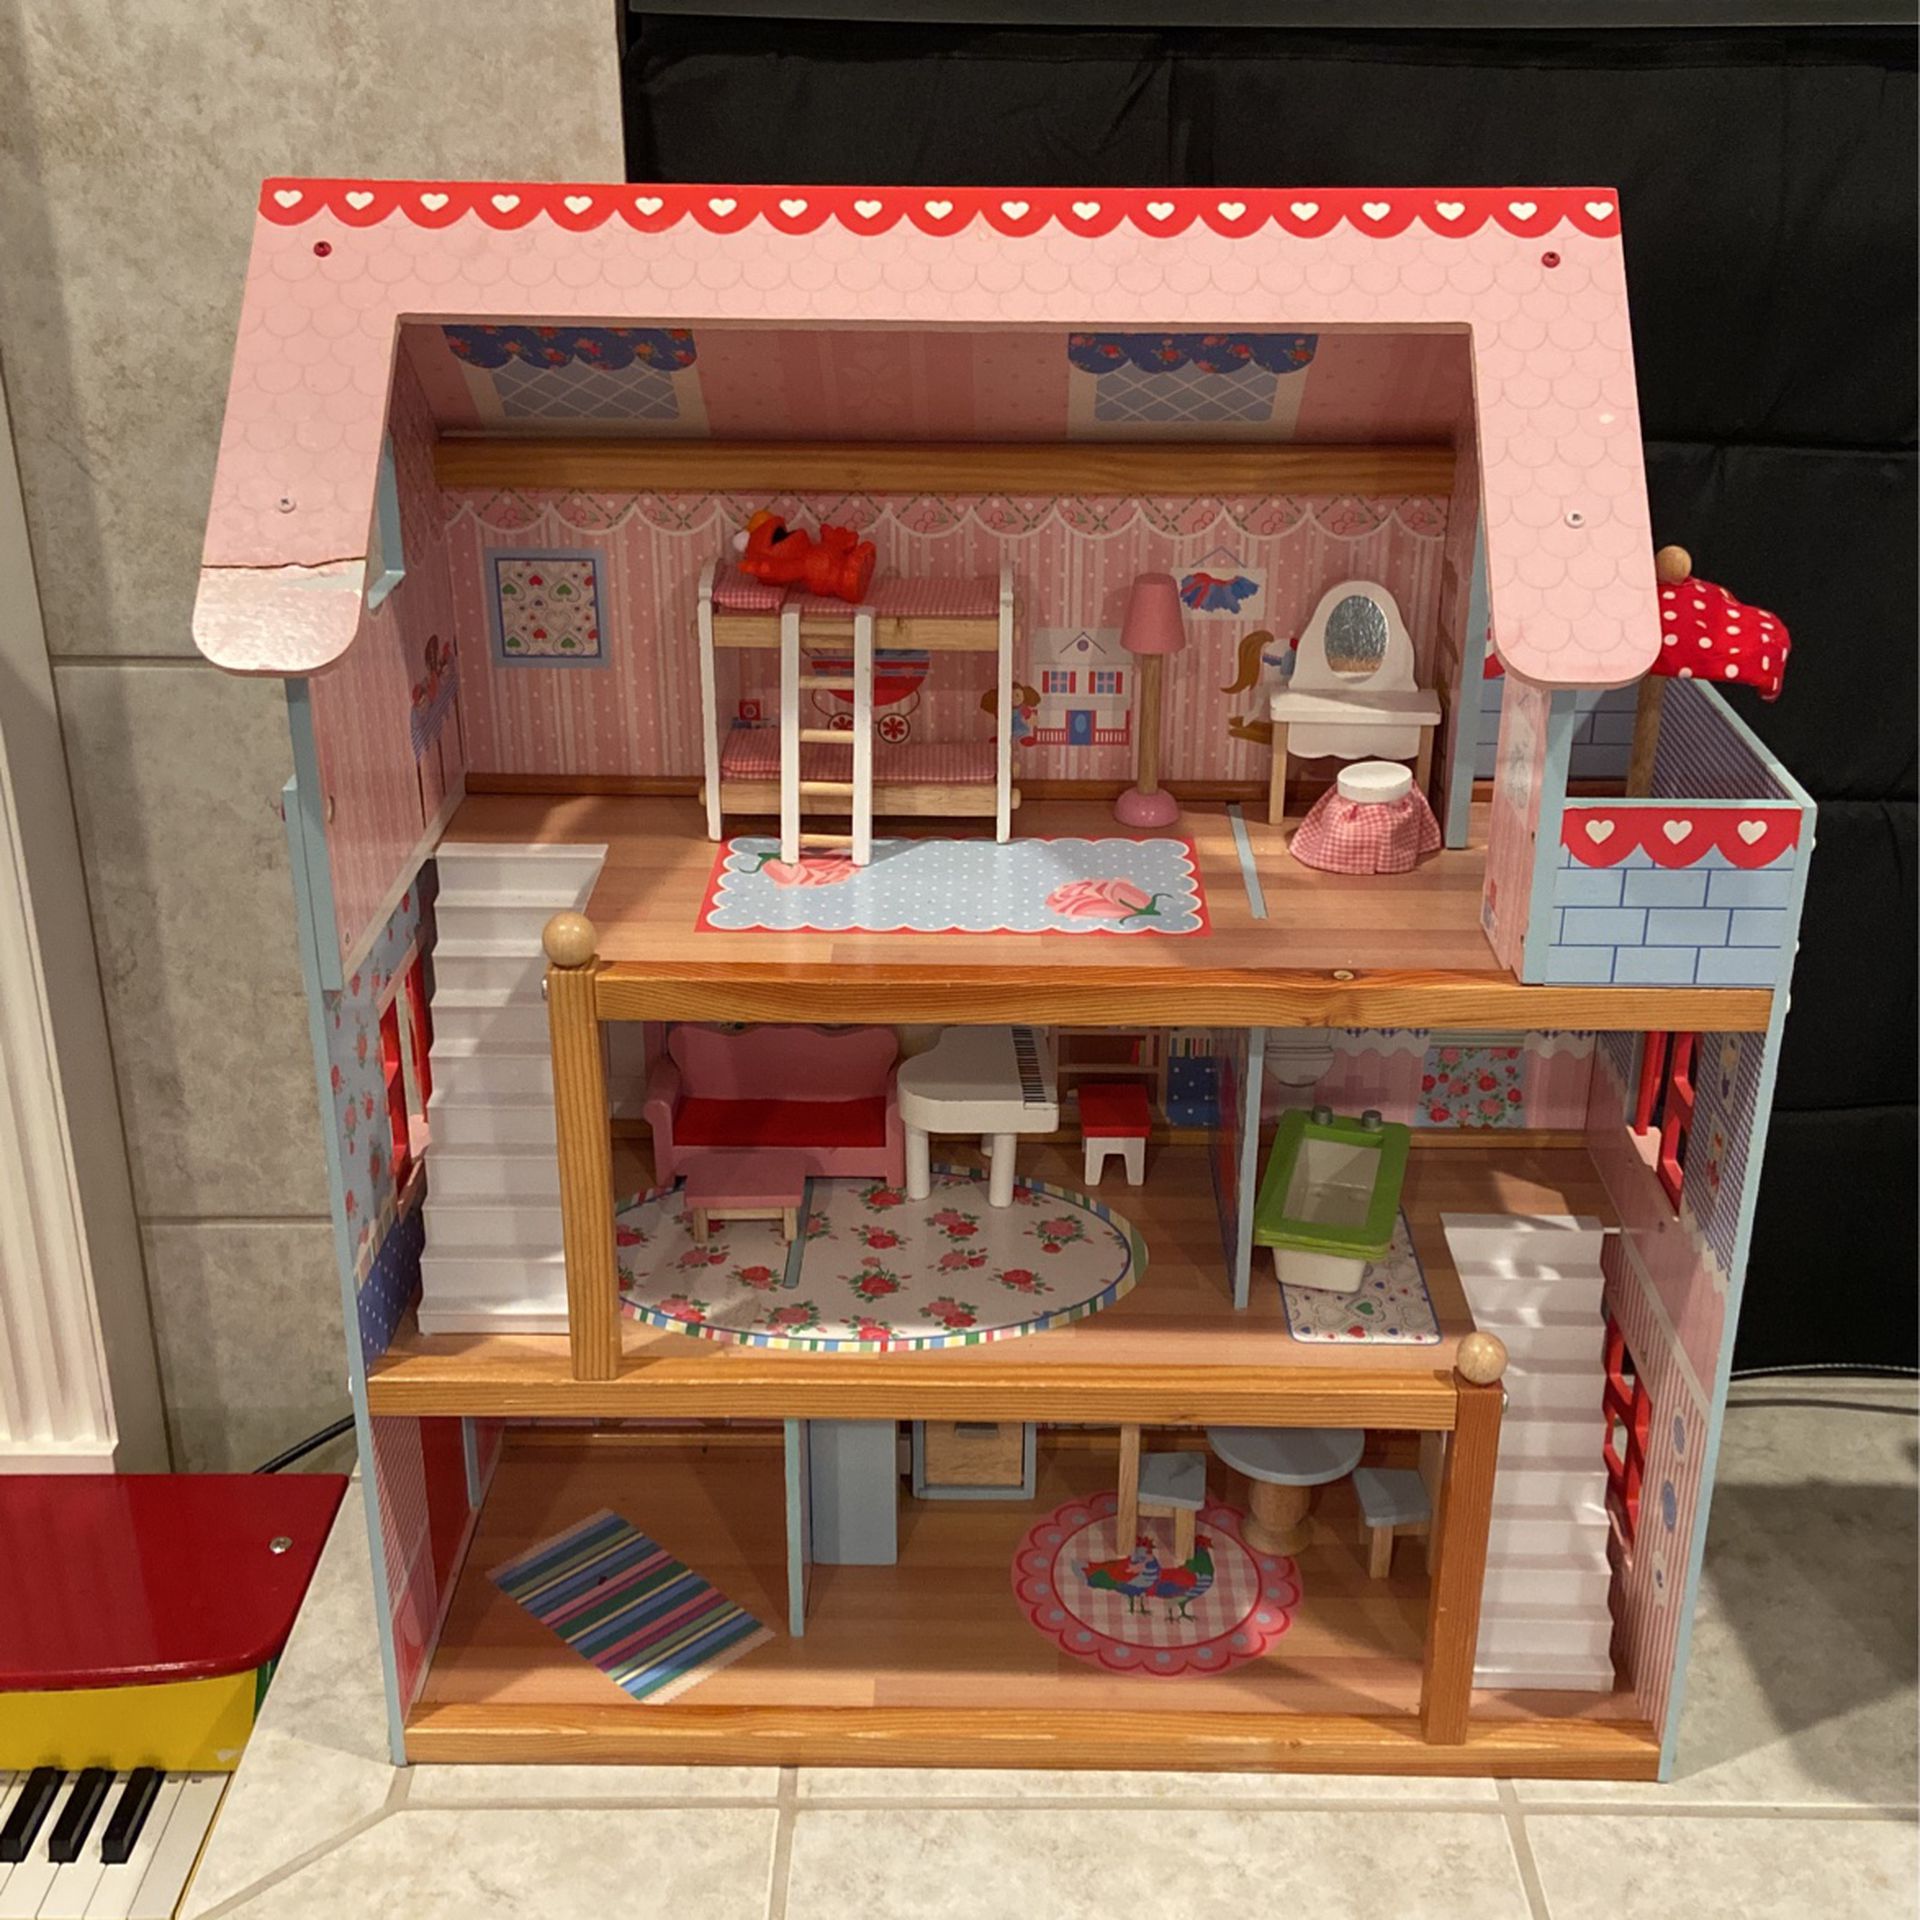 KidKraft Dollhouse